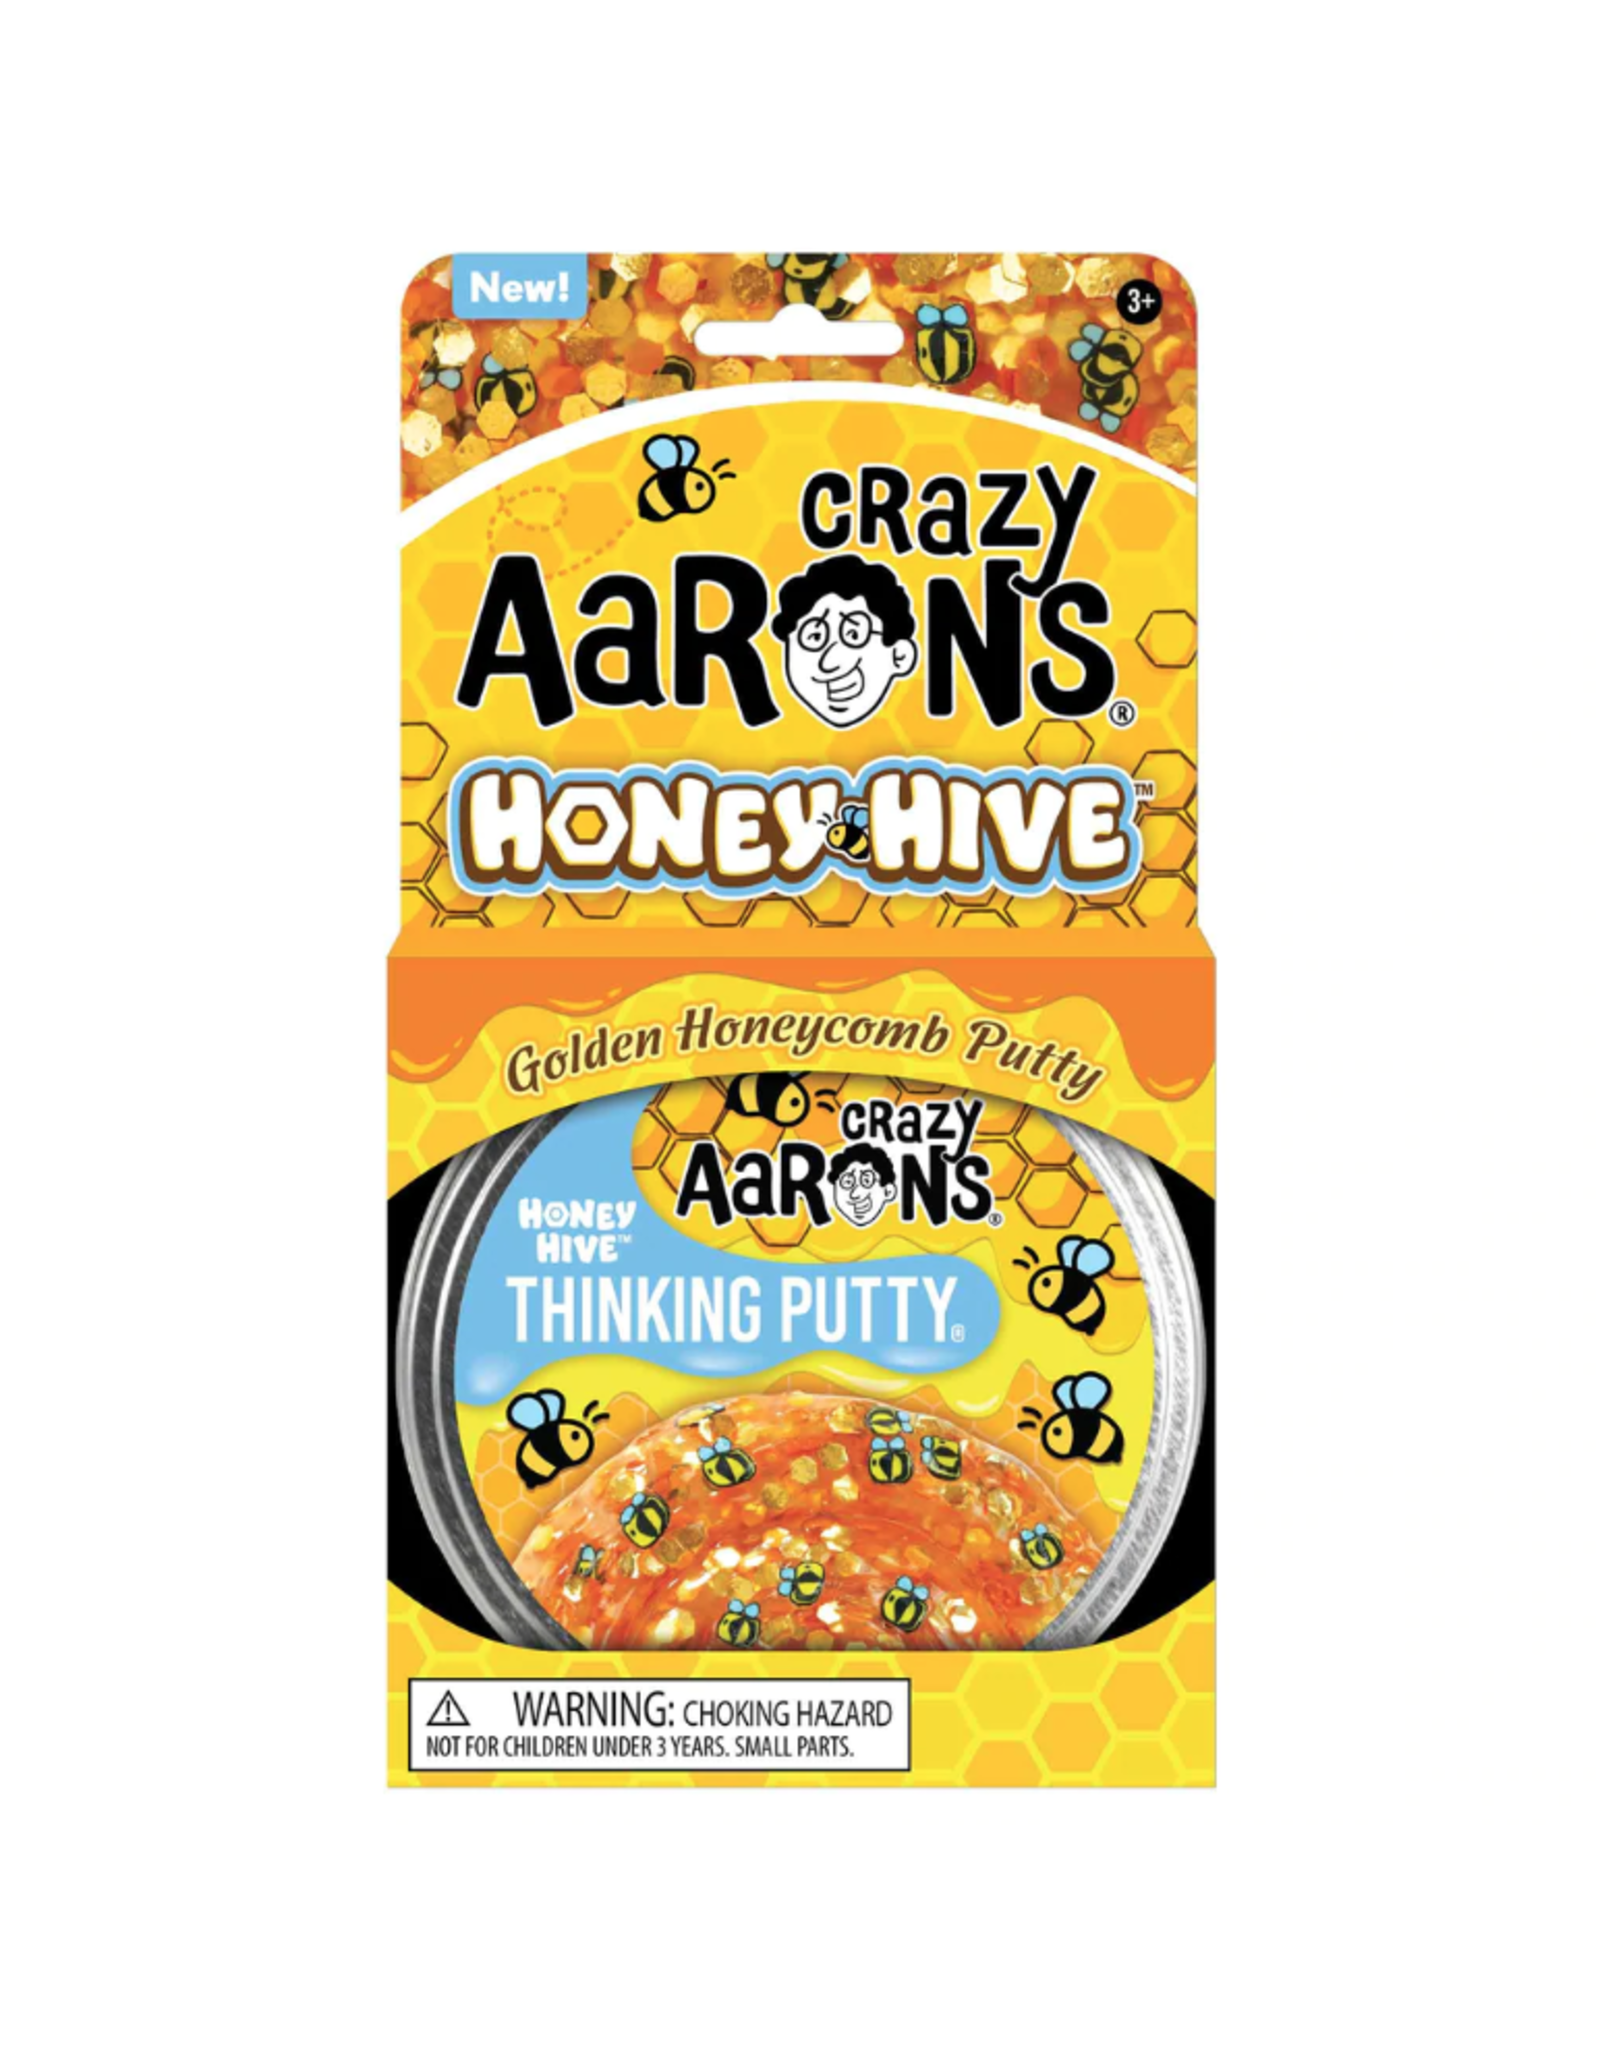 Crazy Aaron's Putty World Honey Hive Thinking Putty